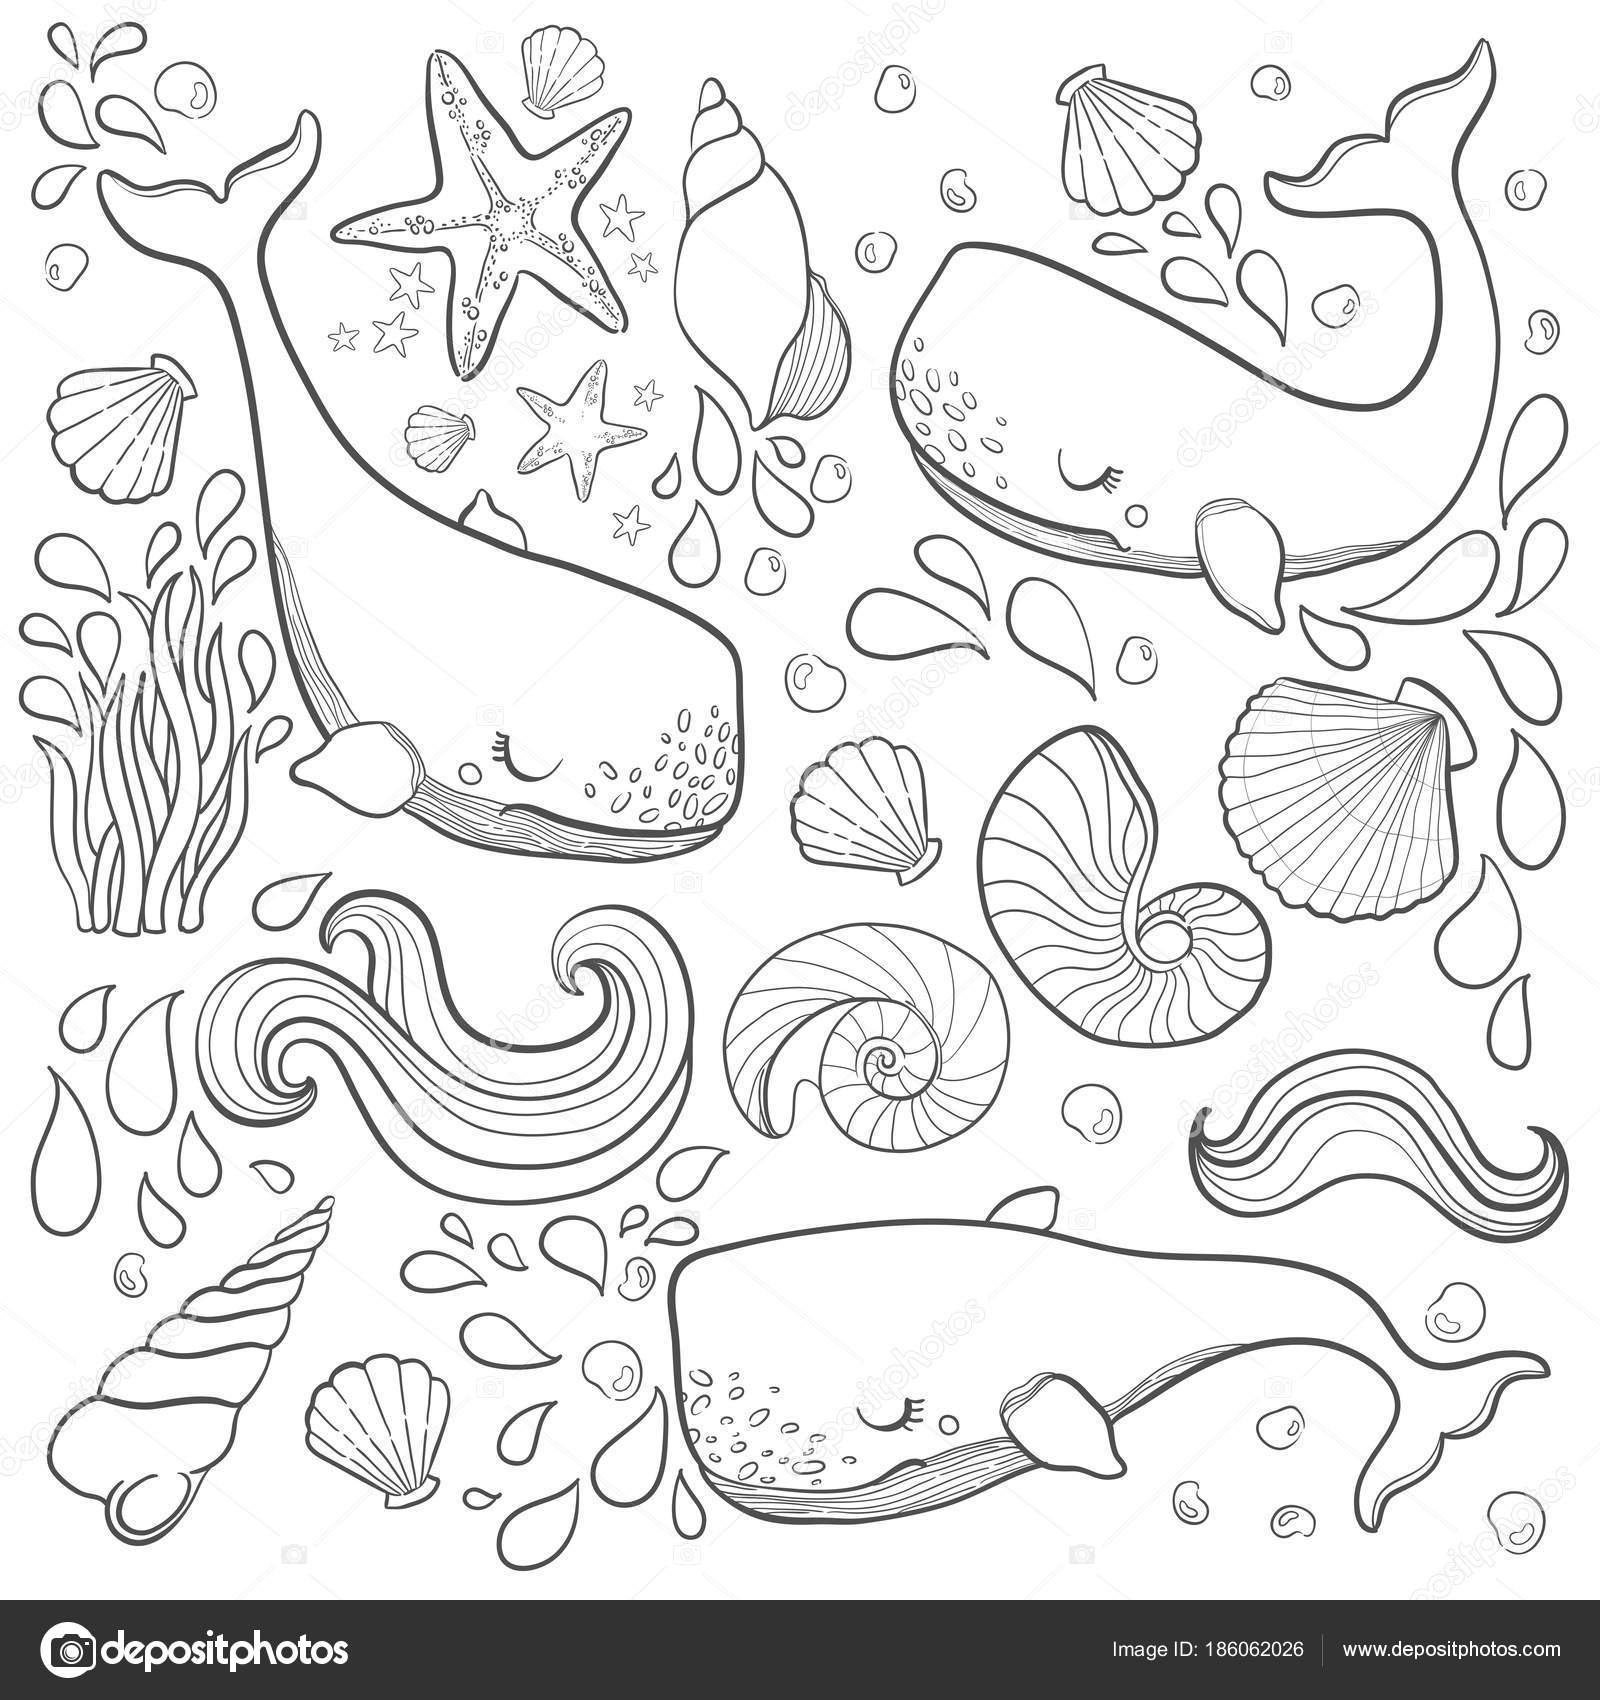 Coloring page - Baleia no Oceano